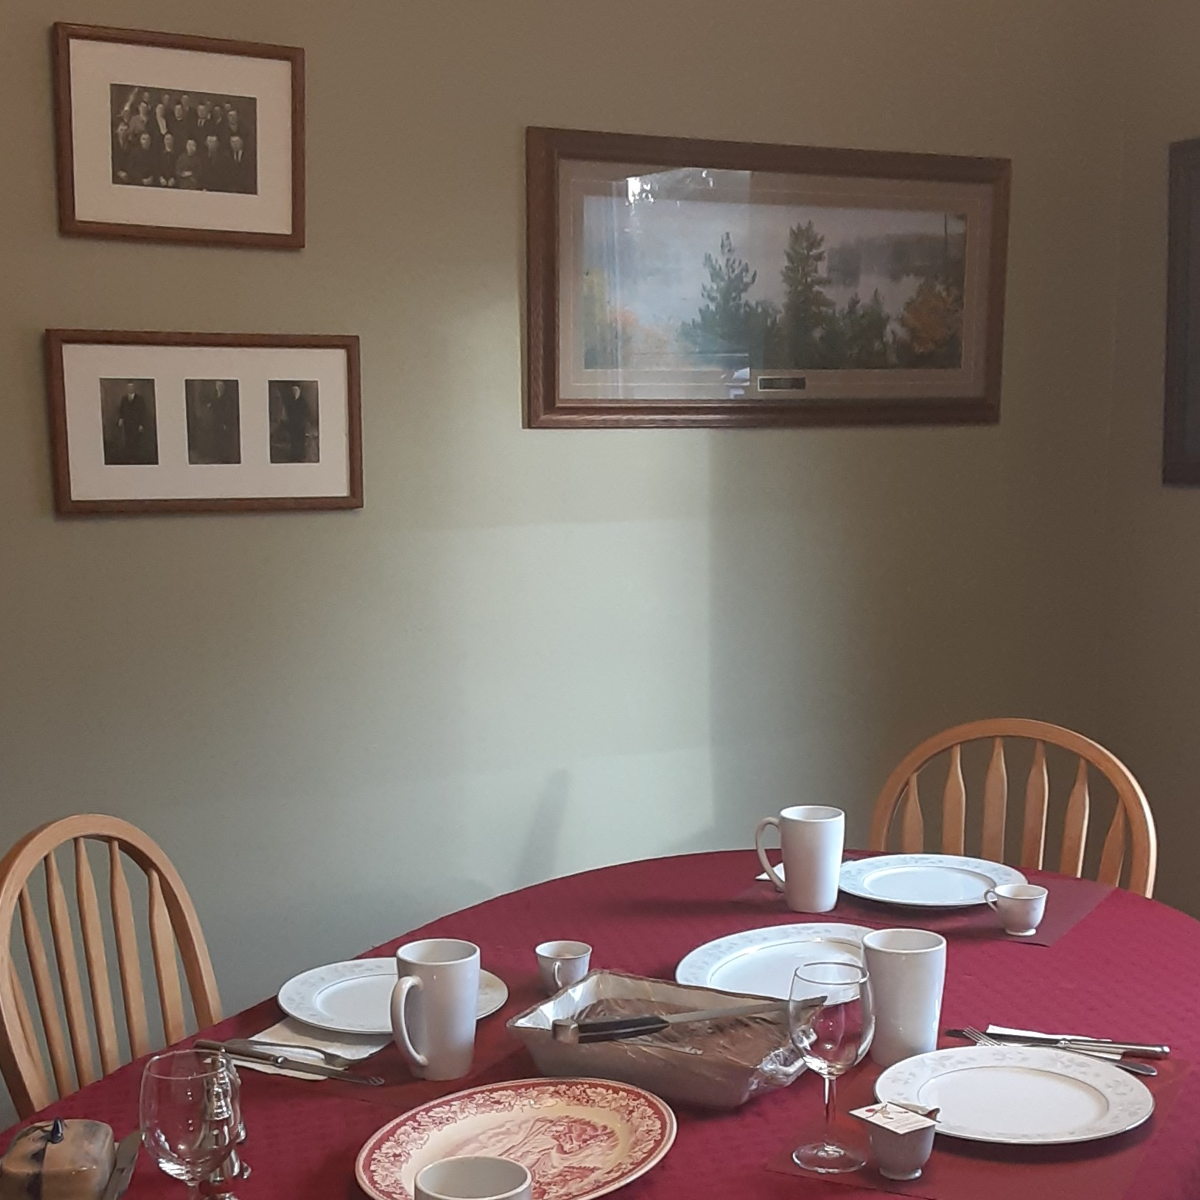 Pierogi Night in Canada, classic family dinner